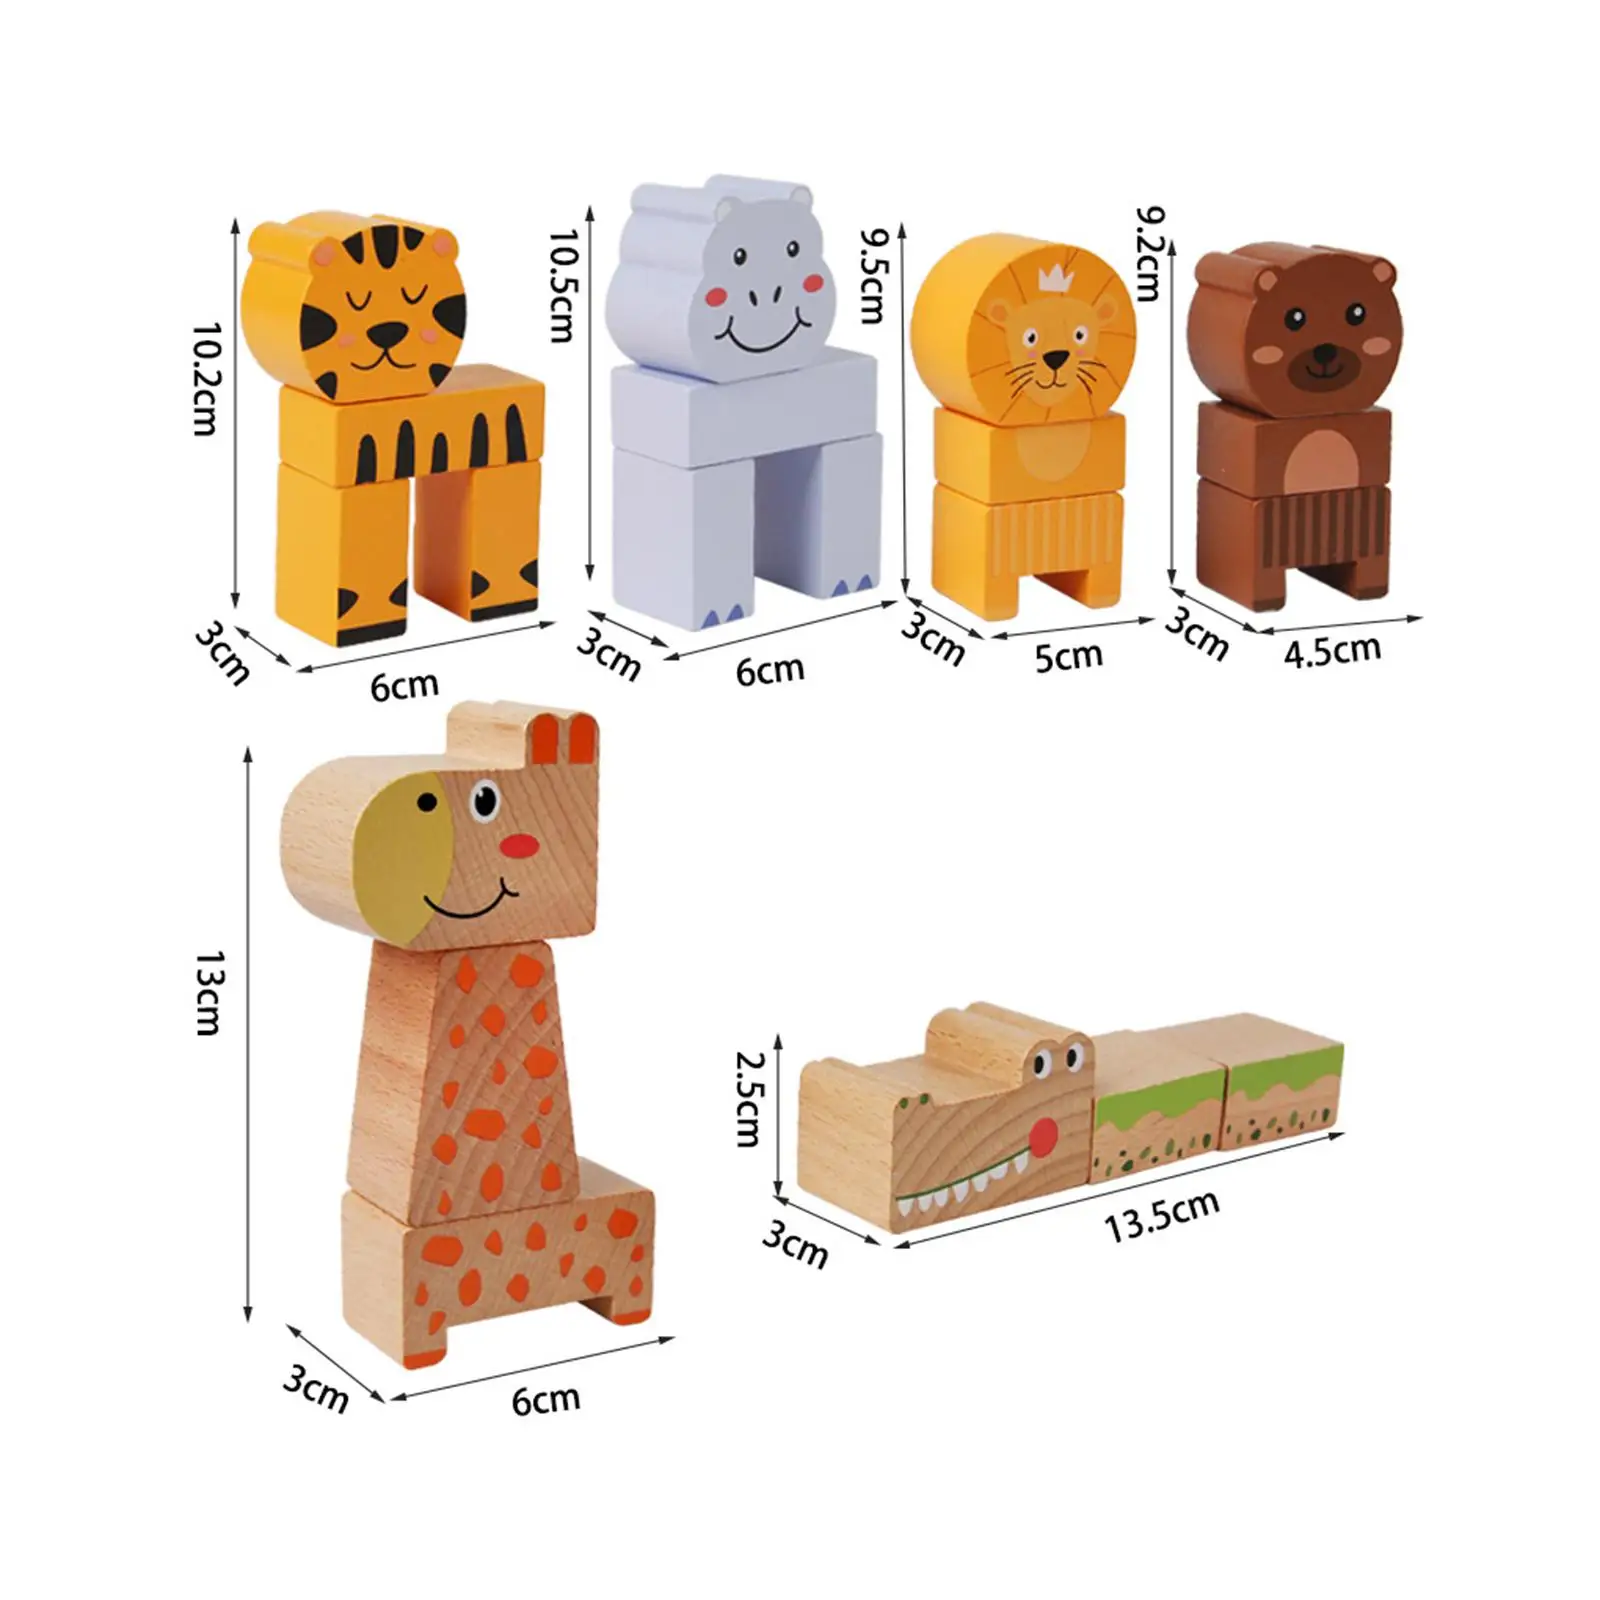 Wooden Animals Stacking Blocks, Balance Game Game Toy, Montessori for 3 4 5 6 Years Old Kids boys girls Birthday Gifts